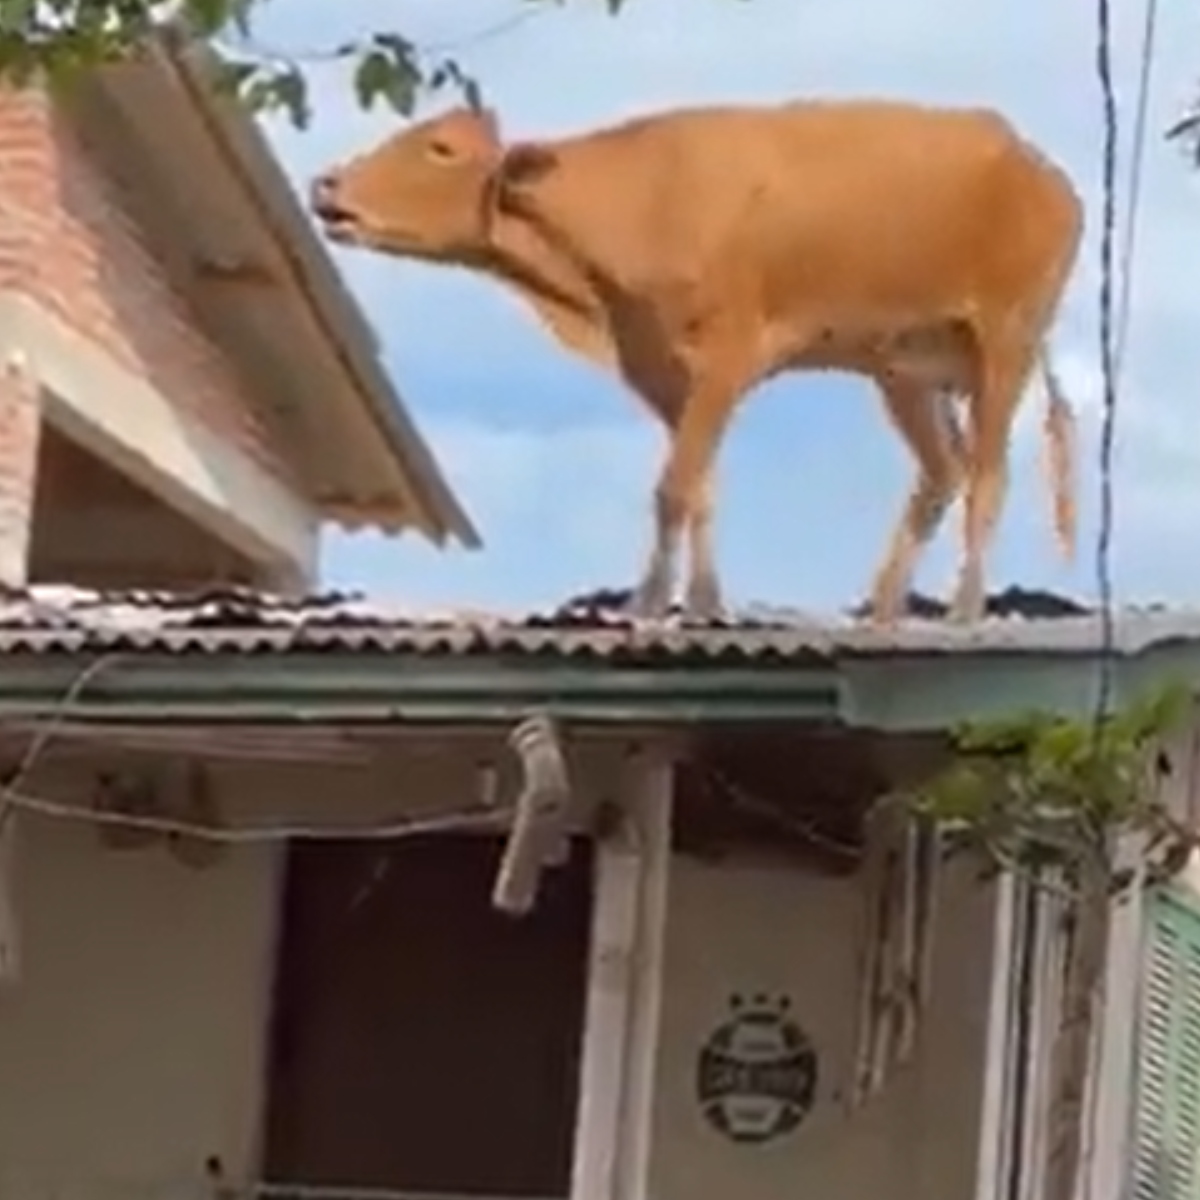  vaca-telhado 